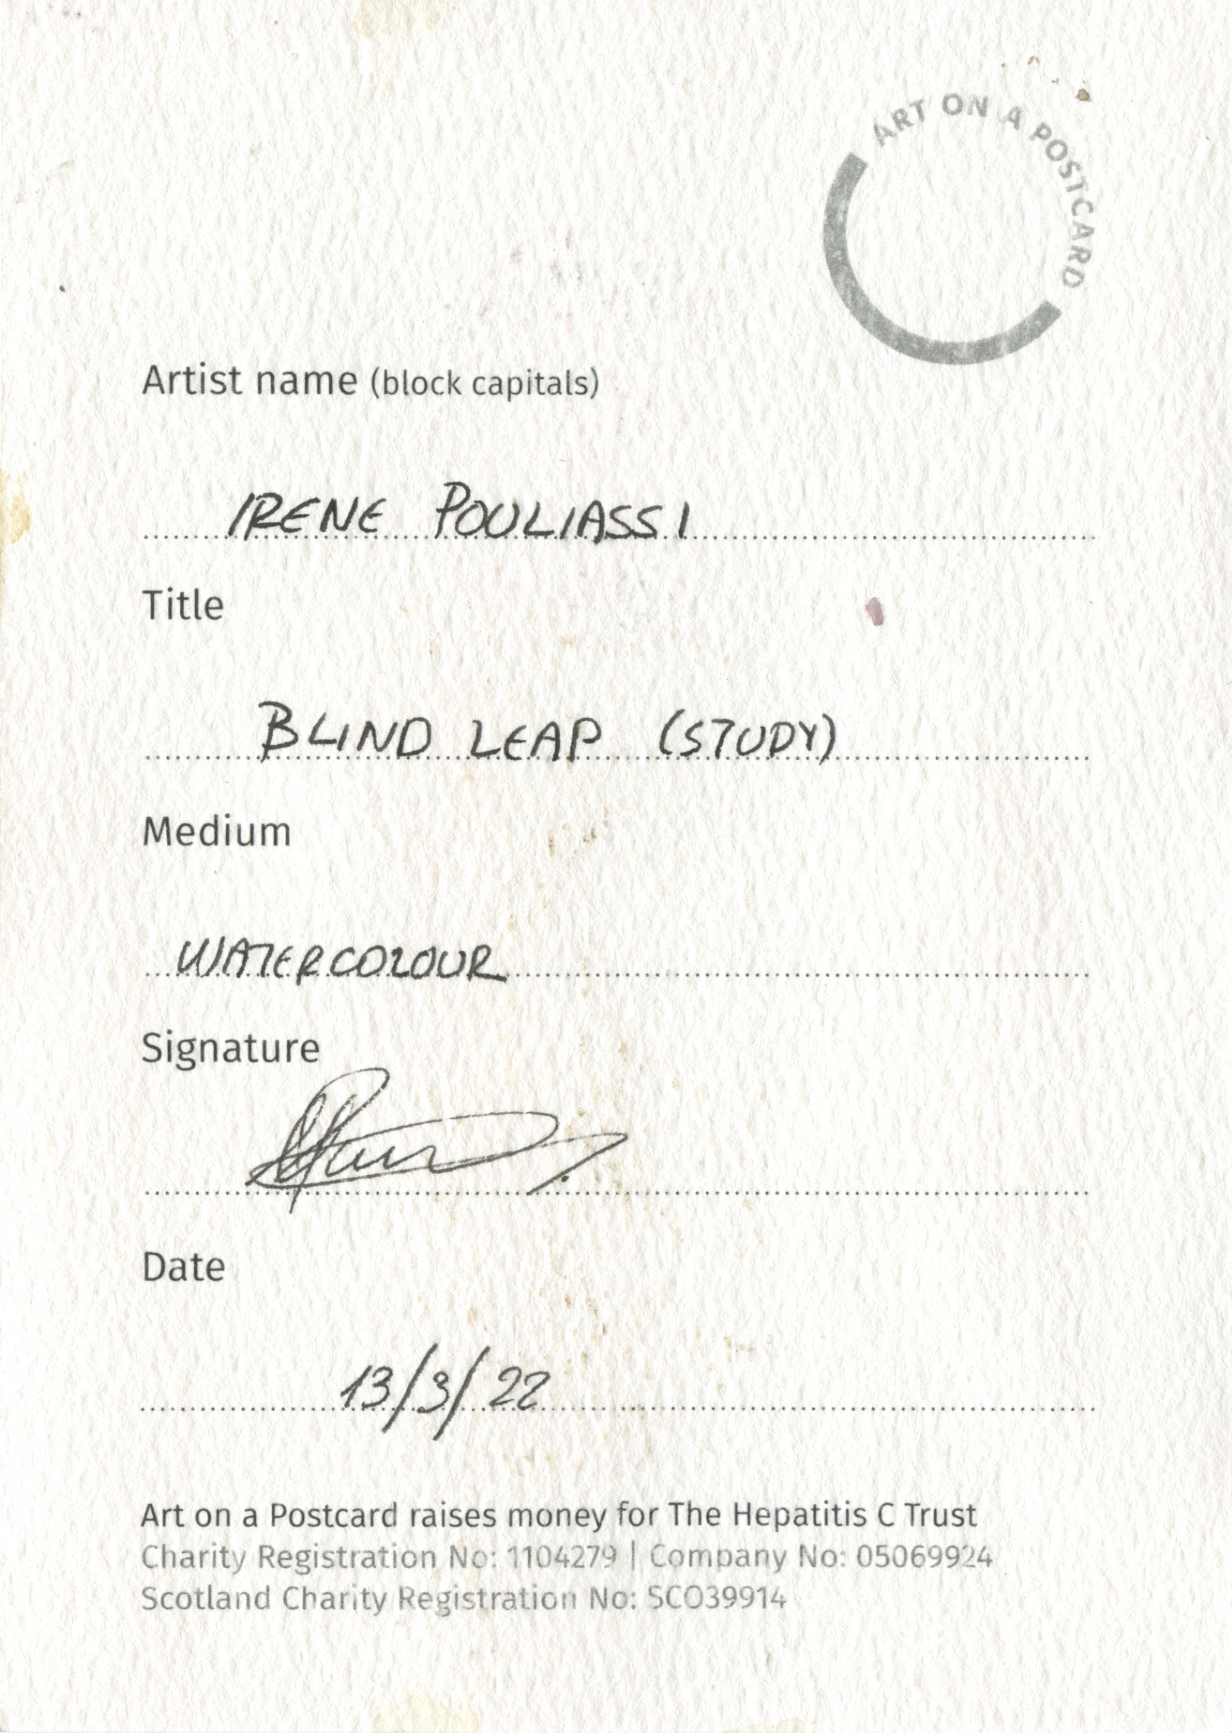 86. Irene Pouliassi - Blind Leap (Study) - BACK